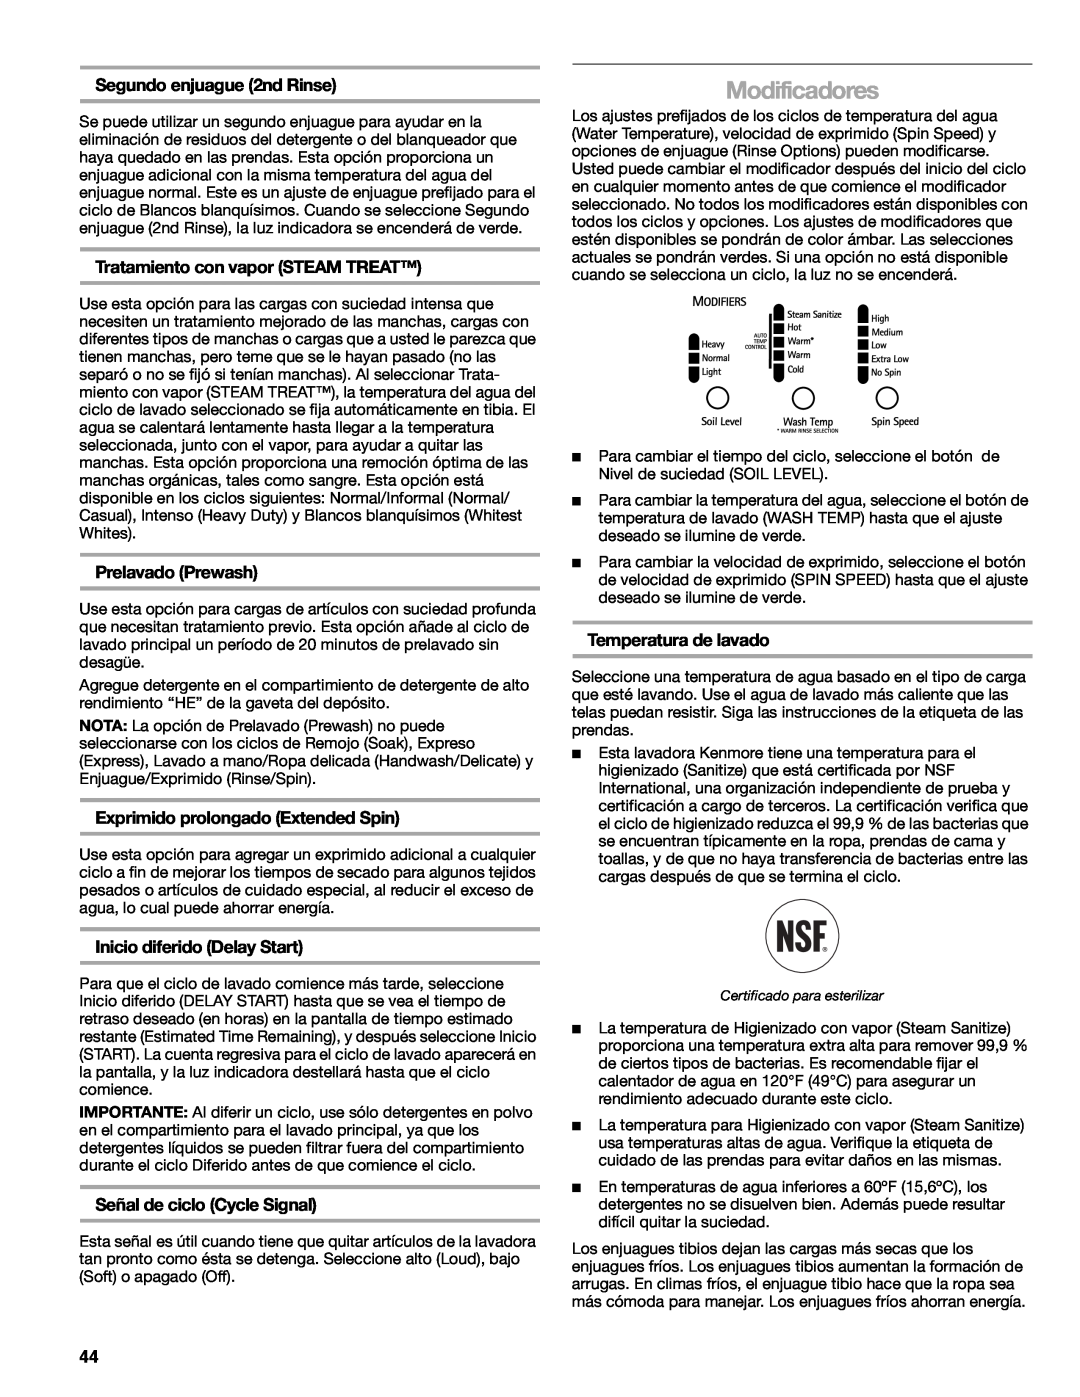 Kenmore W10133487A manual Modificadores, Segundo enjuague 2nd Rinse, Prelavado Prewash, Exprimido prolongado Extended Spin 